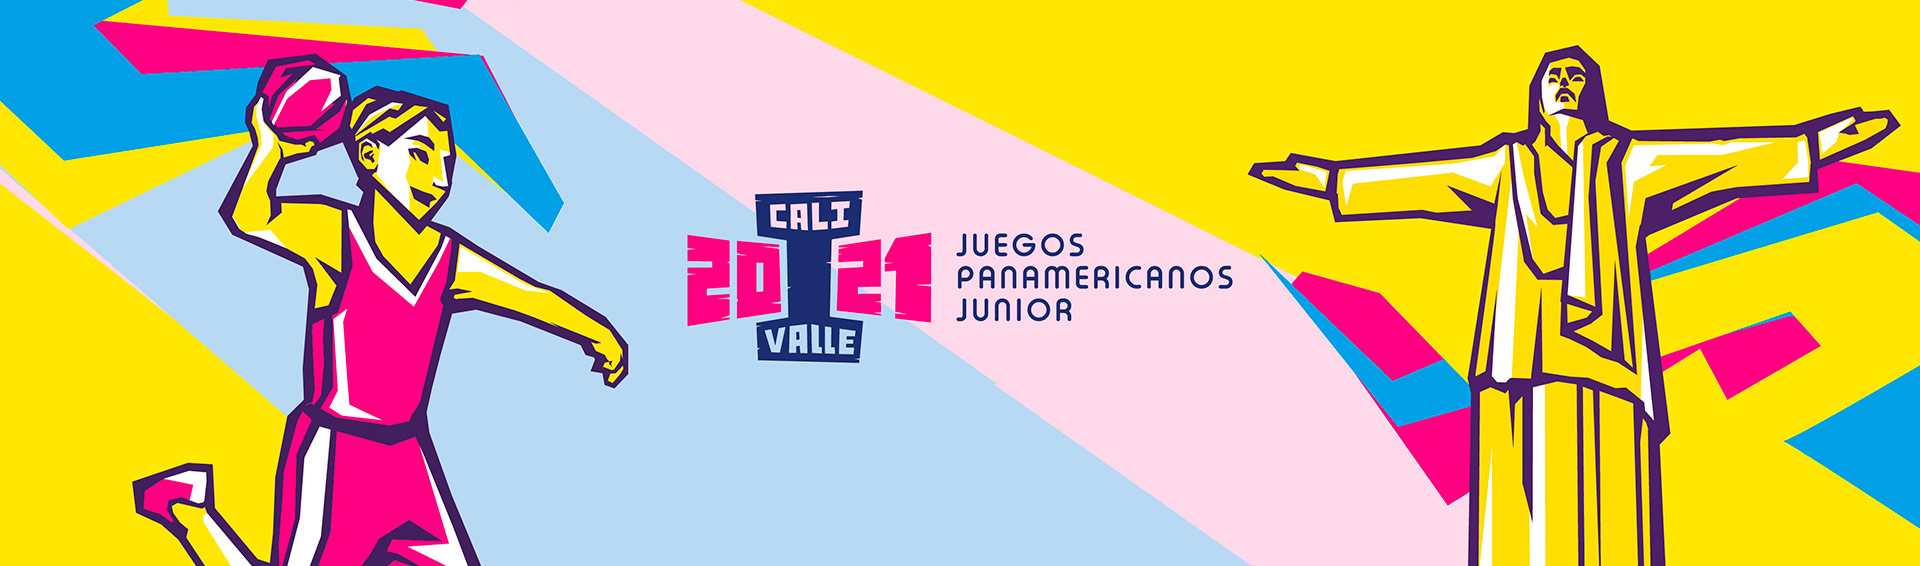 Mindeportes y Panam Sports confirman Panamericanos Junior Cali 2021 |  Antena 2